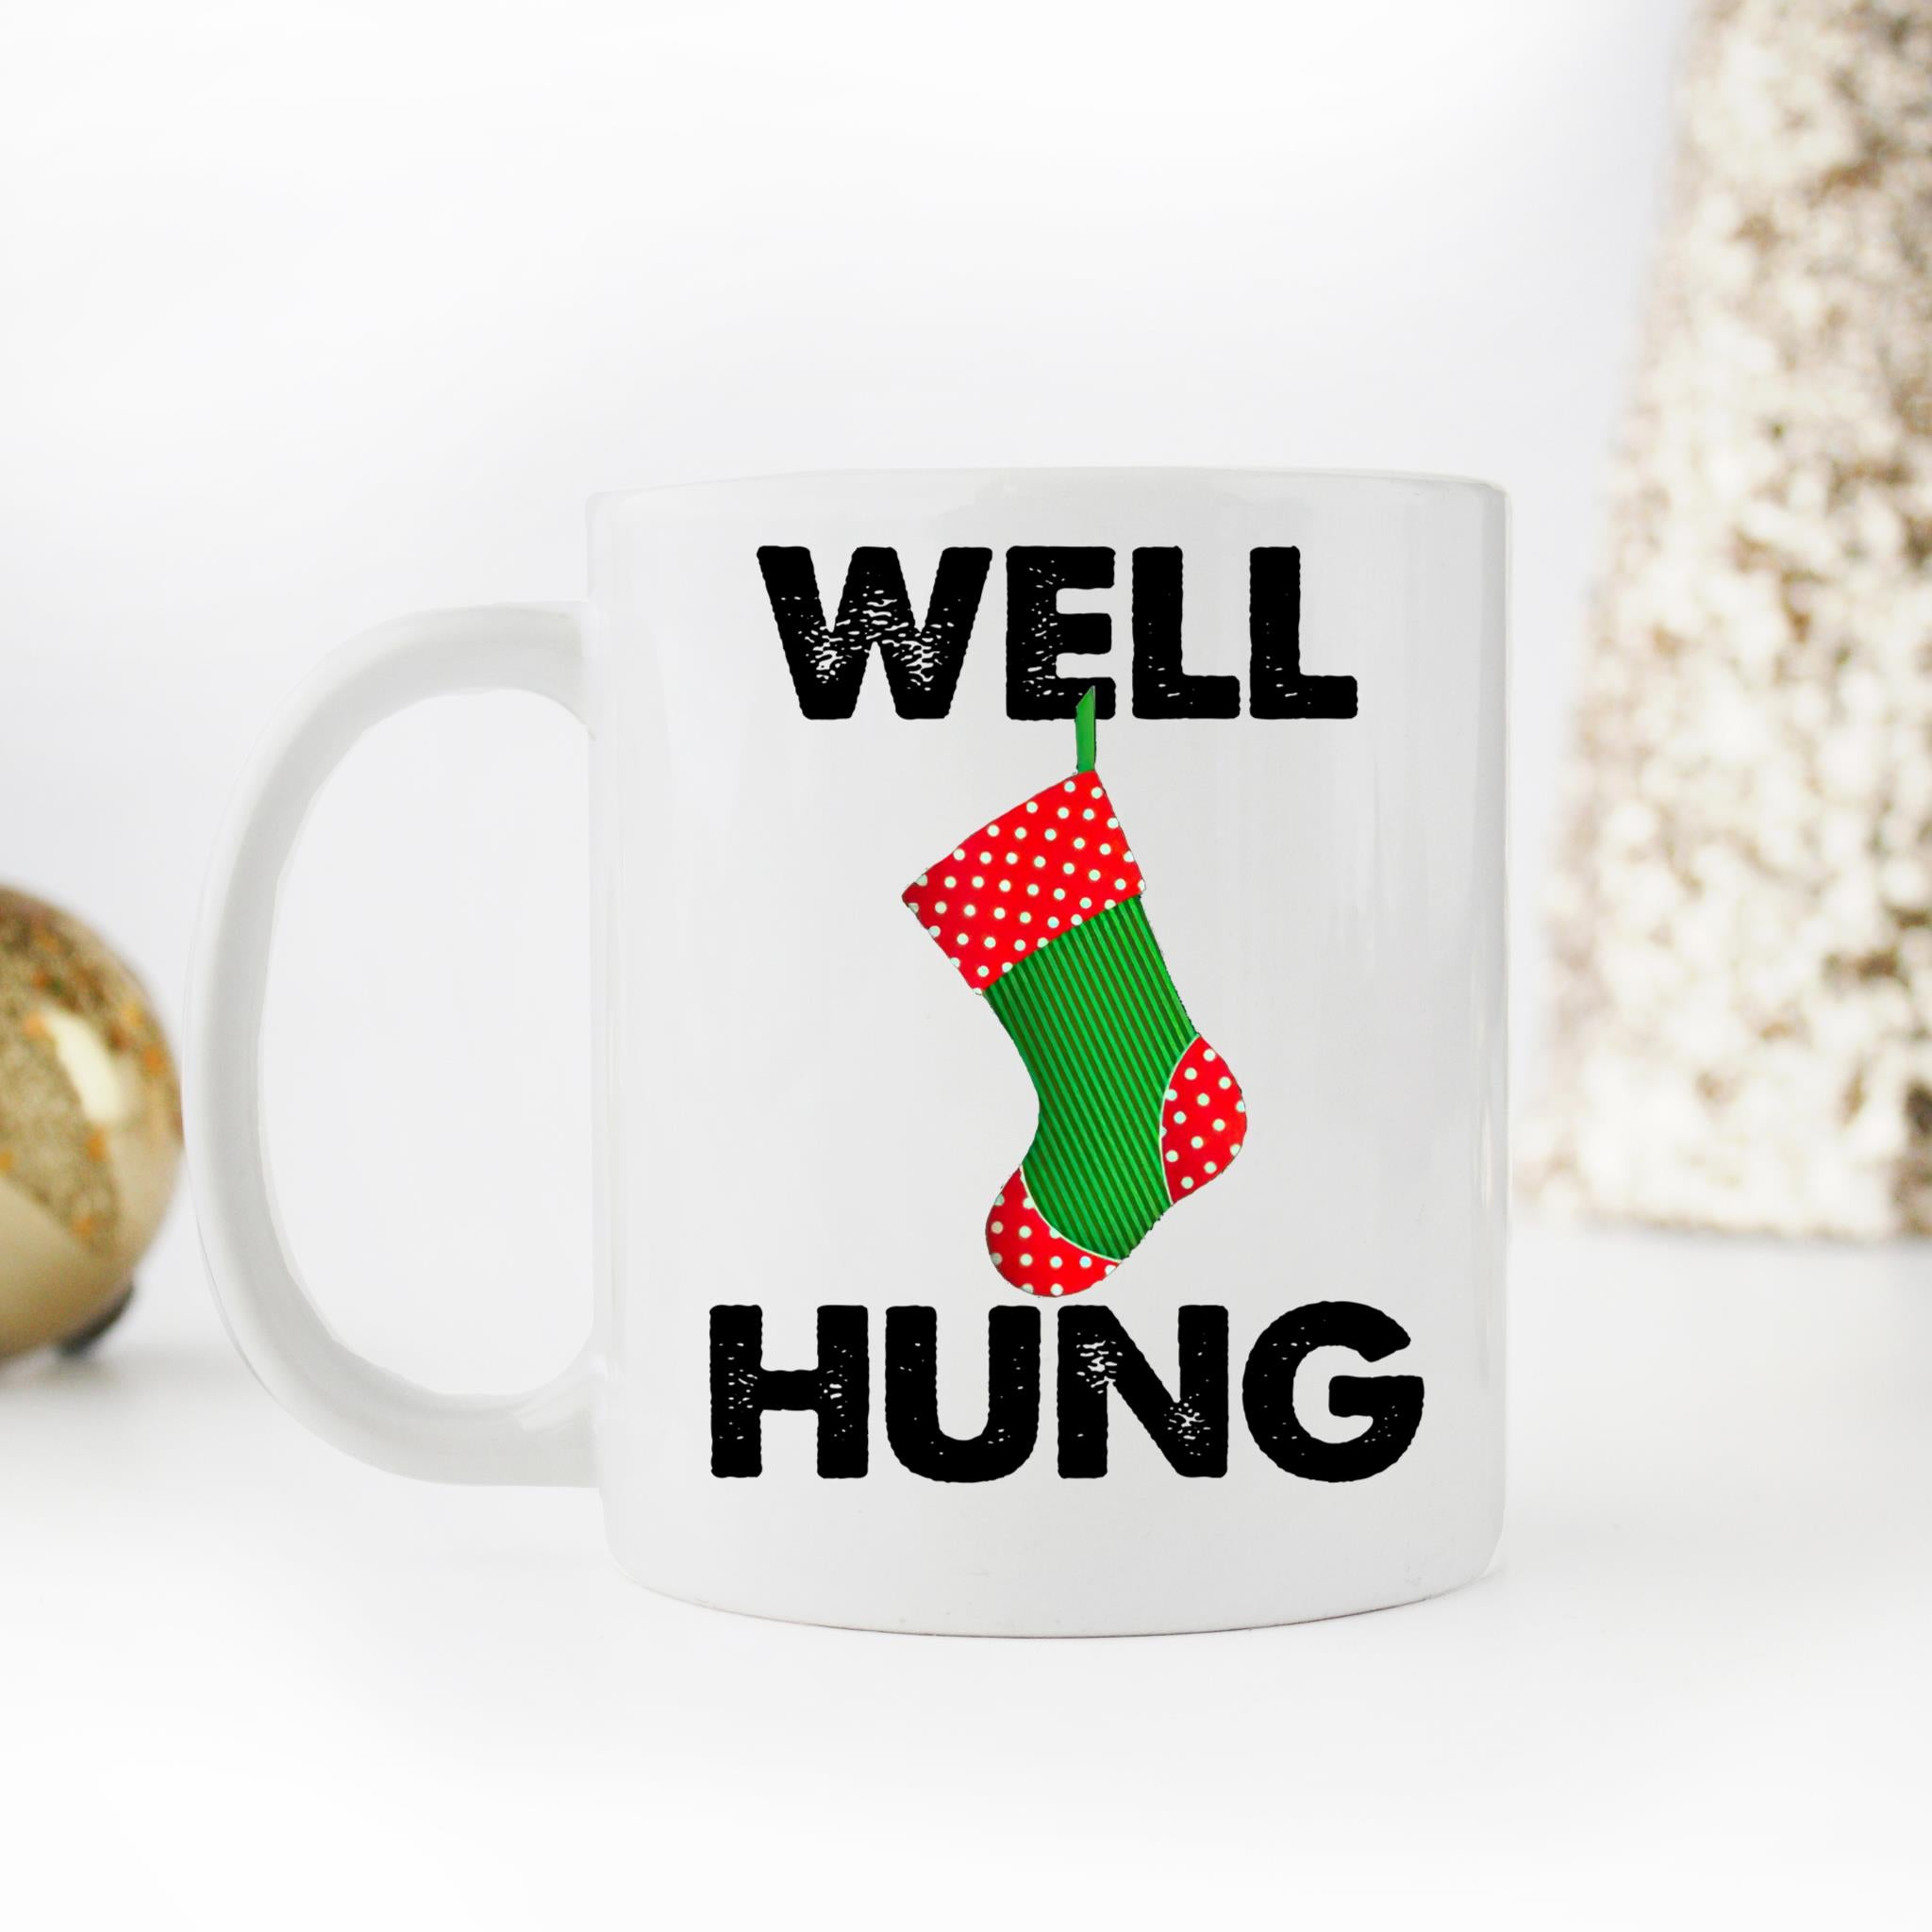 Skitongifts Coffee Mug Funny Ceramic Novelty Christmas Well Hung 8eVu4z0